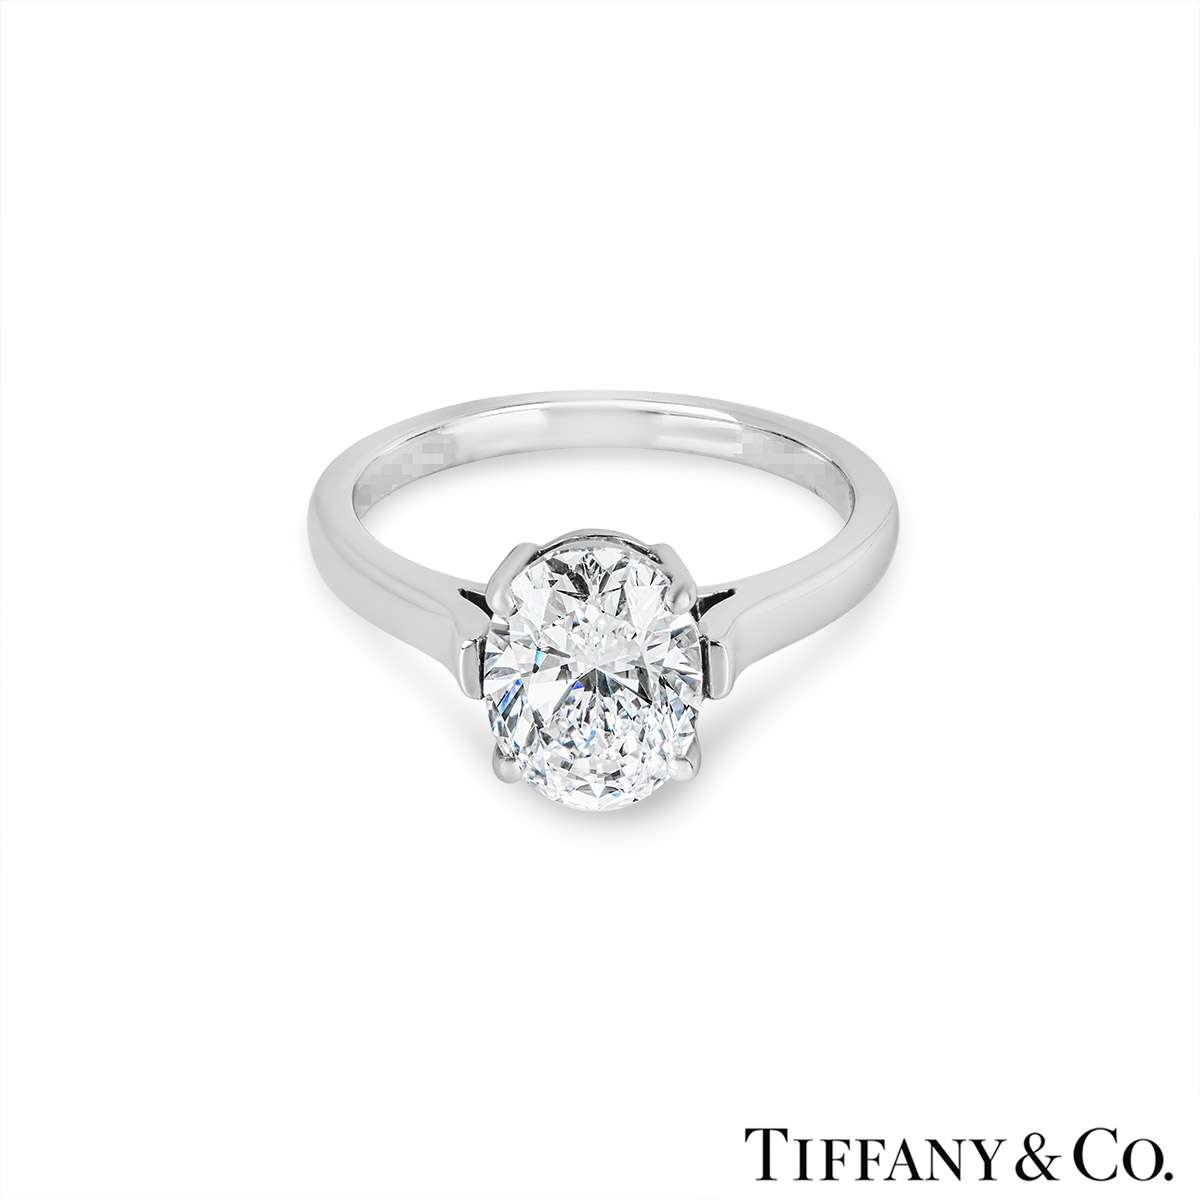 Tiffany & Co. Platinum Oval Cut Diamond Ring 2.06ct D/VVS2